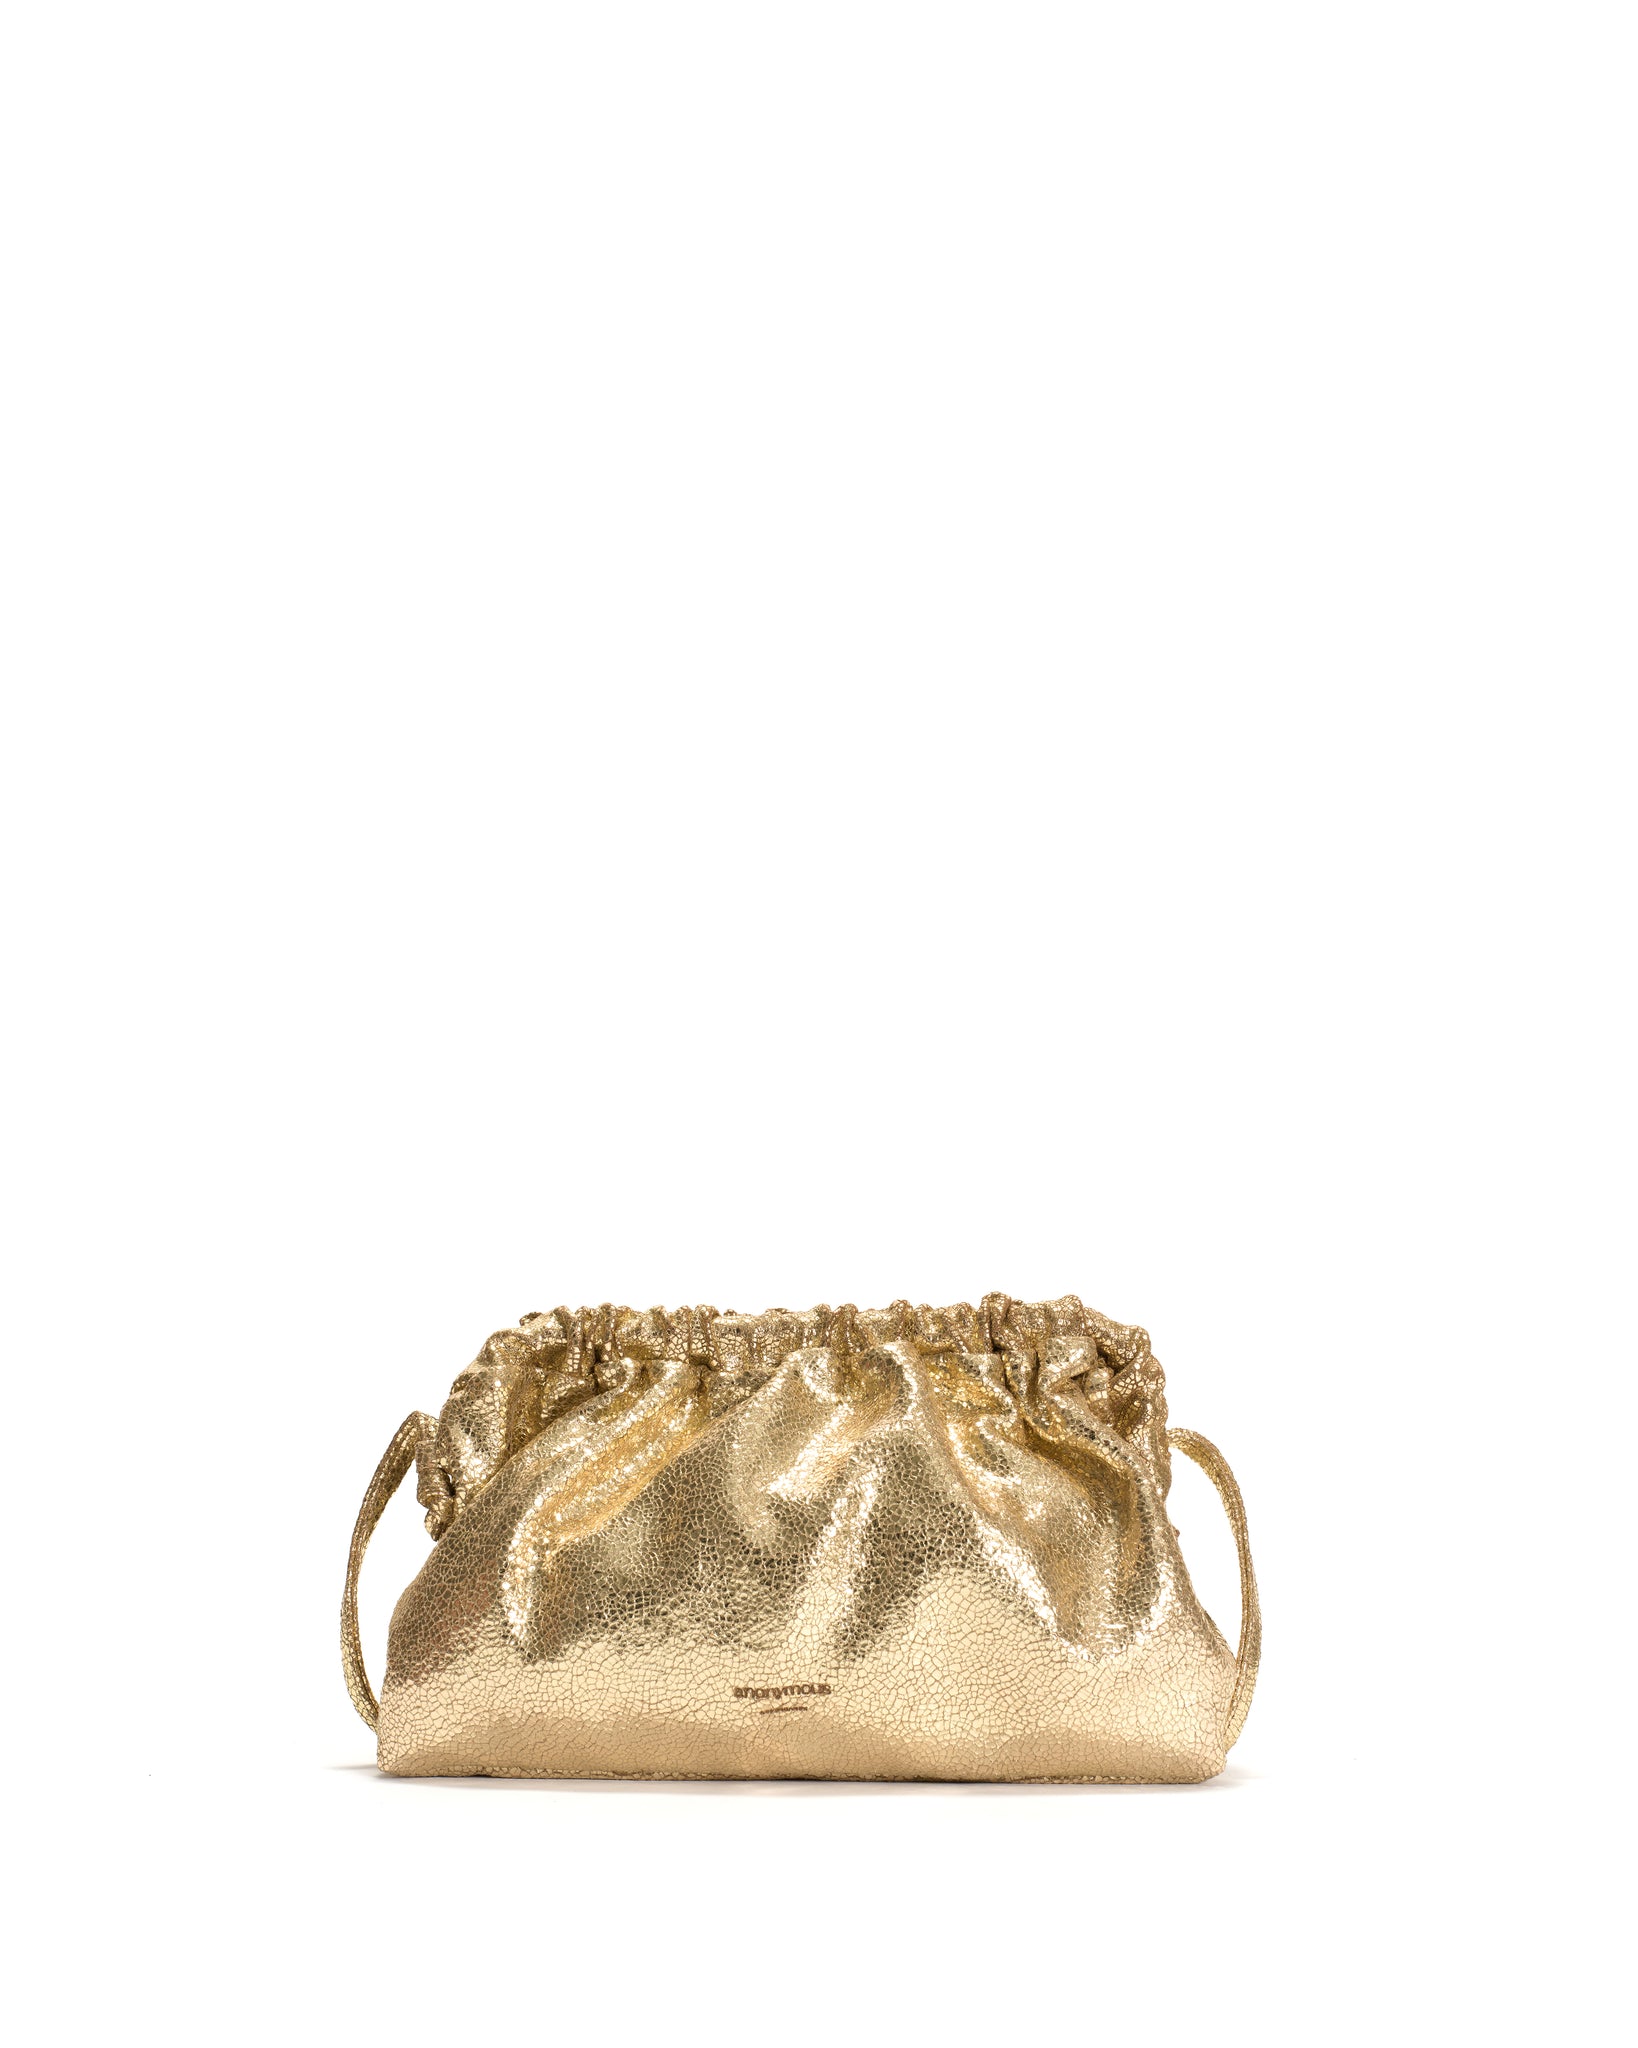 Hally grand cloud bag Crackled metallic goat Gold - Anonymous Copenhagen